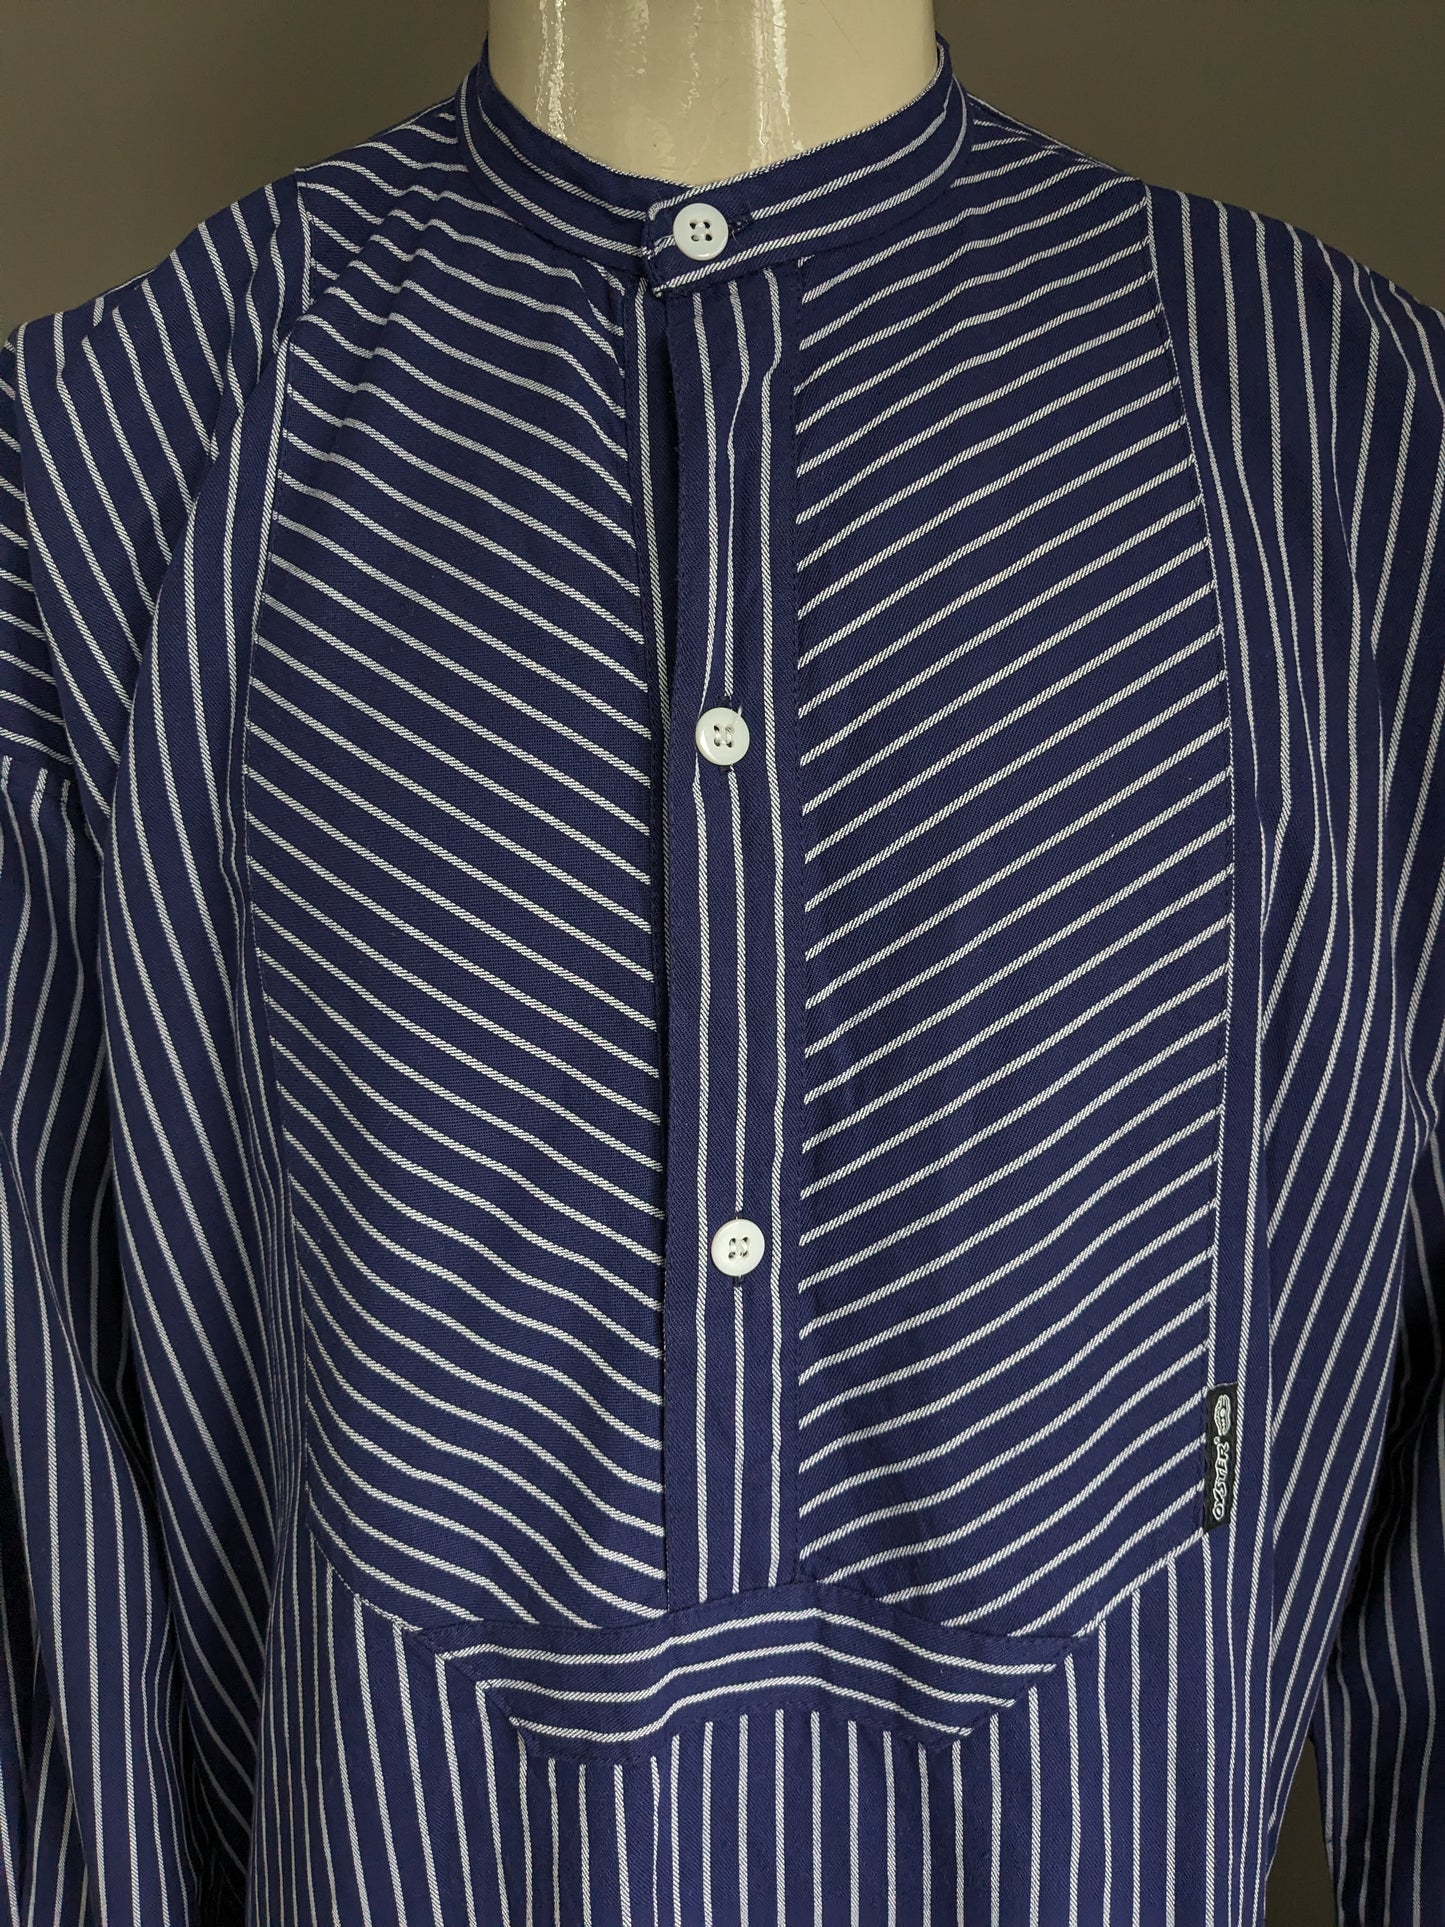 Suéter / camisa de polo vintage con collar elevado / agricultores / mao. Blanco azul rayado. Tamaño xxl / 2xl